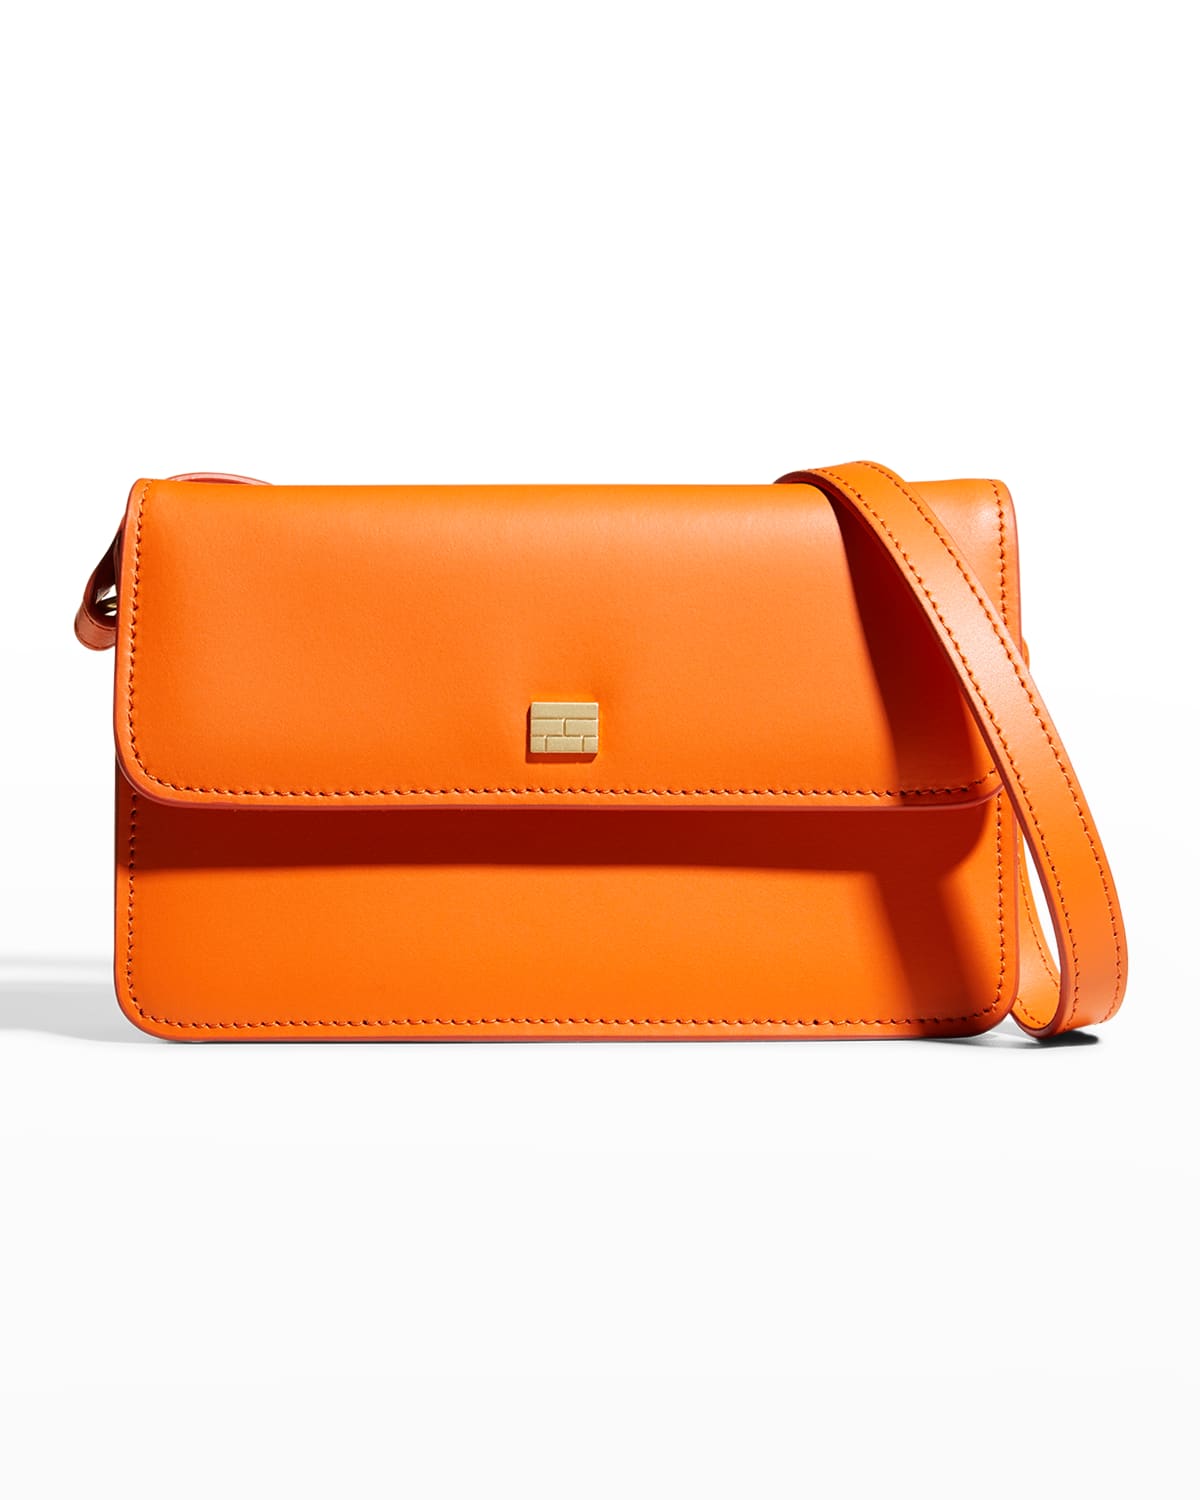 Guess Sydnee Handbag Orange Sporty Logo Crossbody Shoulder Bag